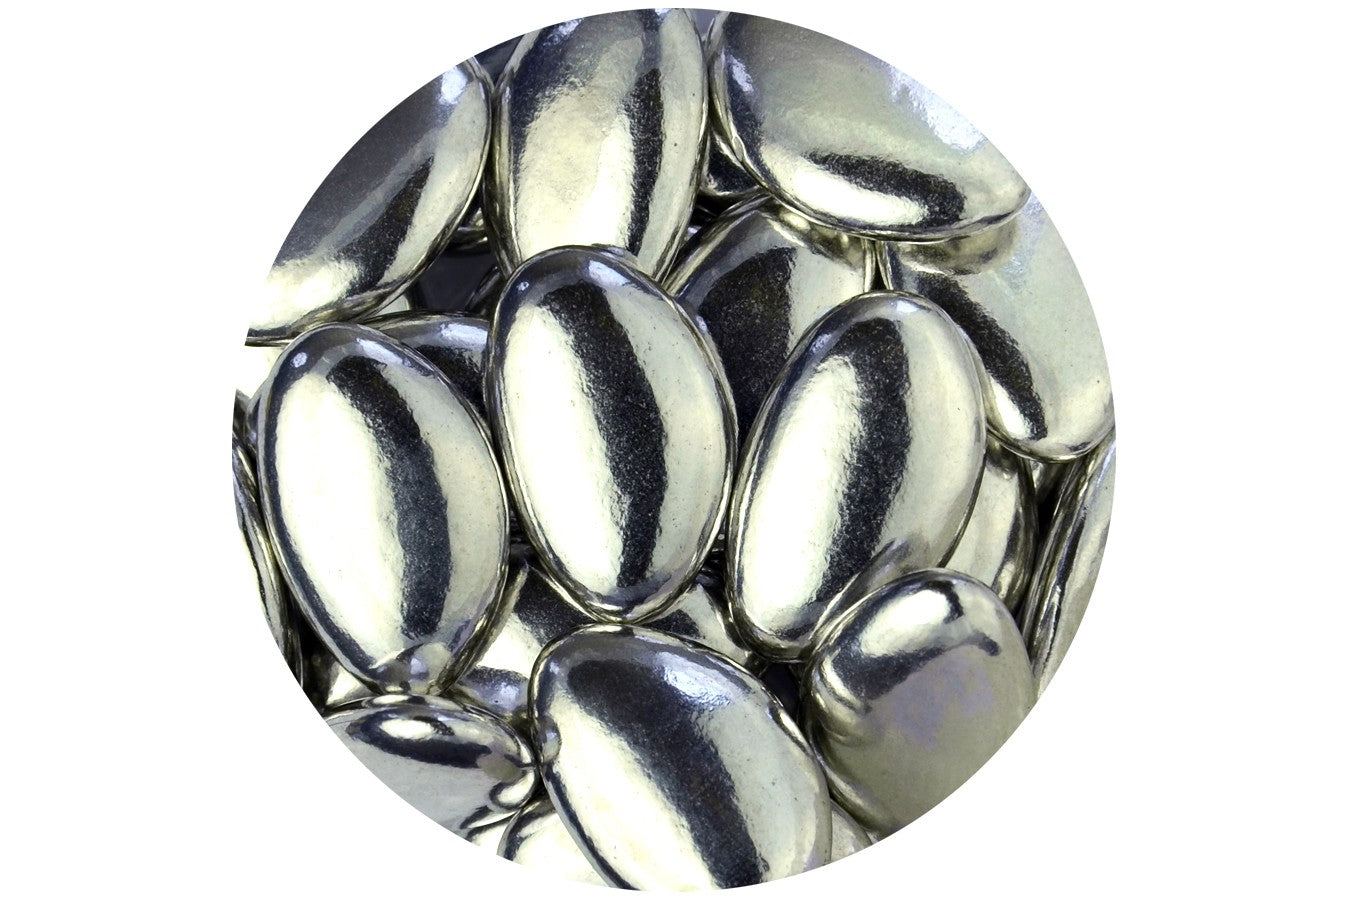 Silver metallic Edible Chocolate Pebbles - The Cooks Cupboard Ltd